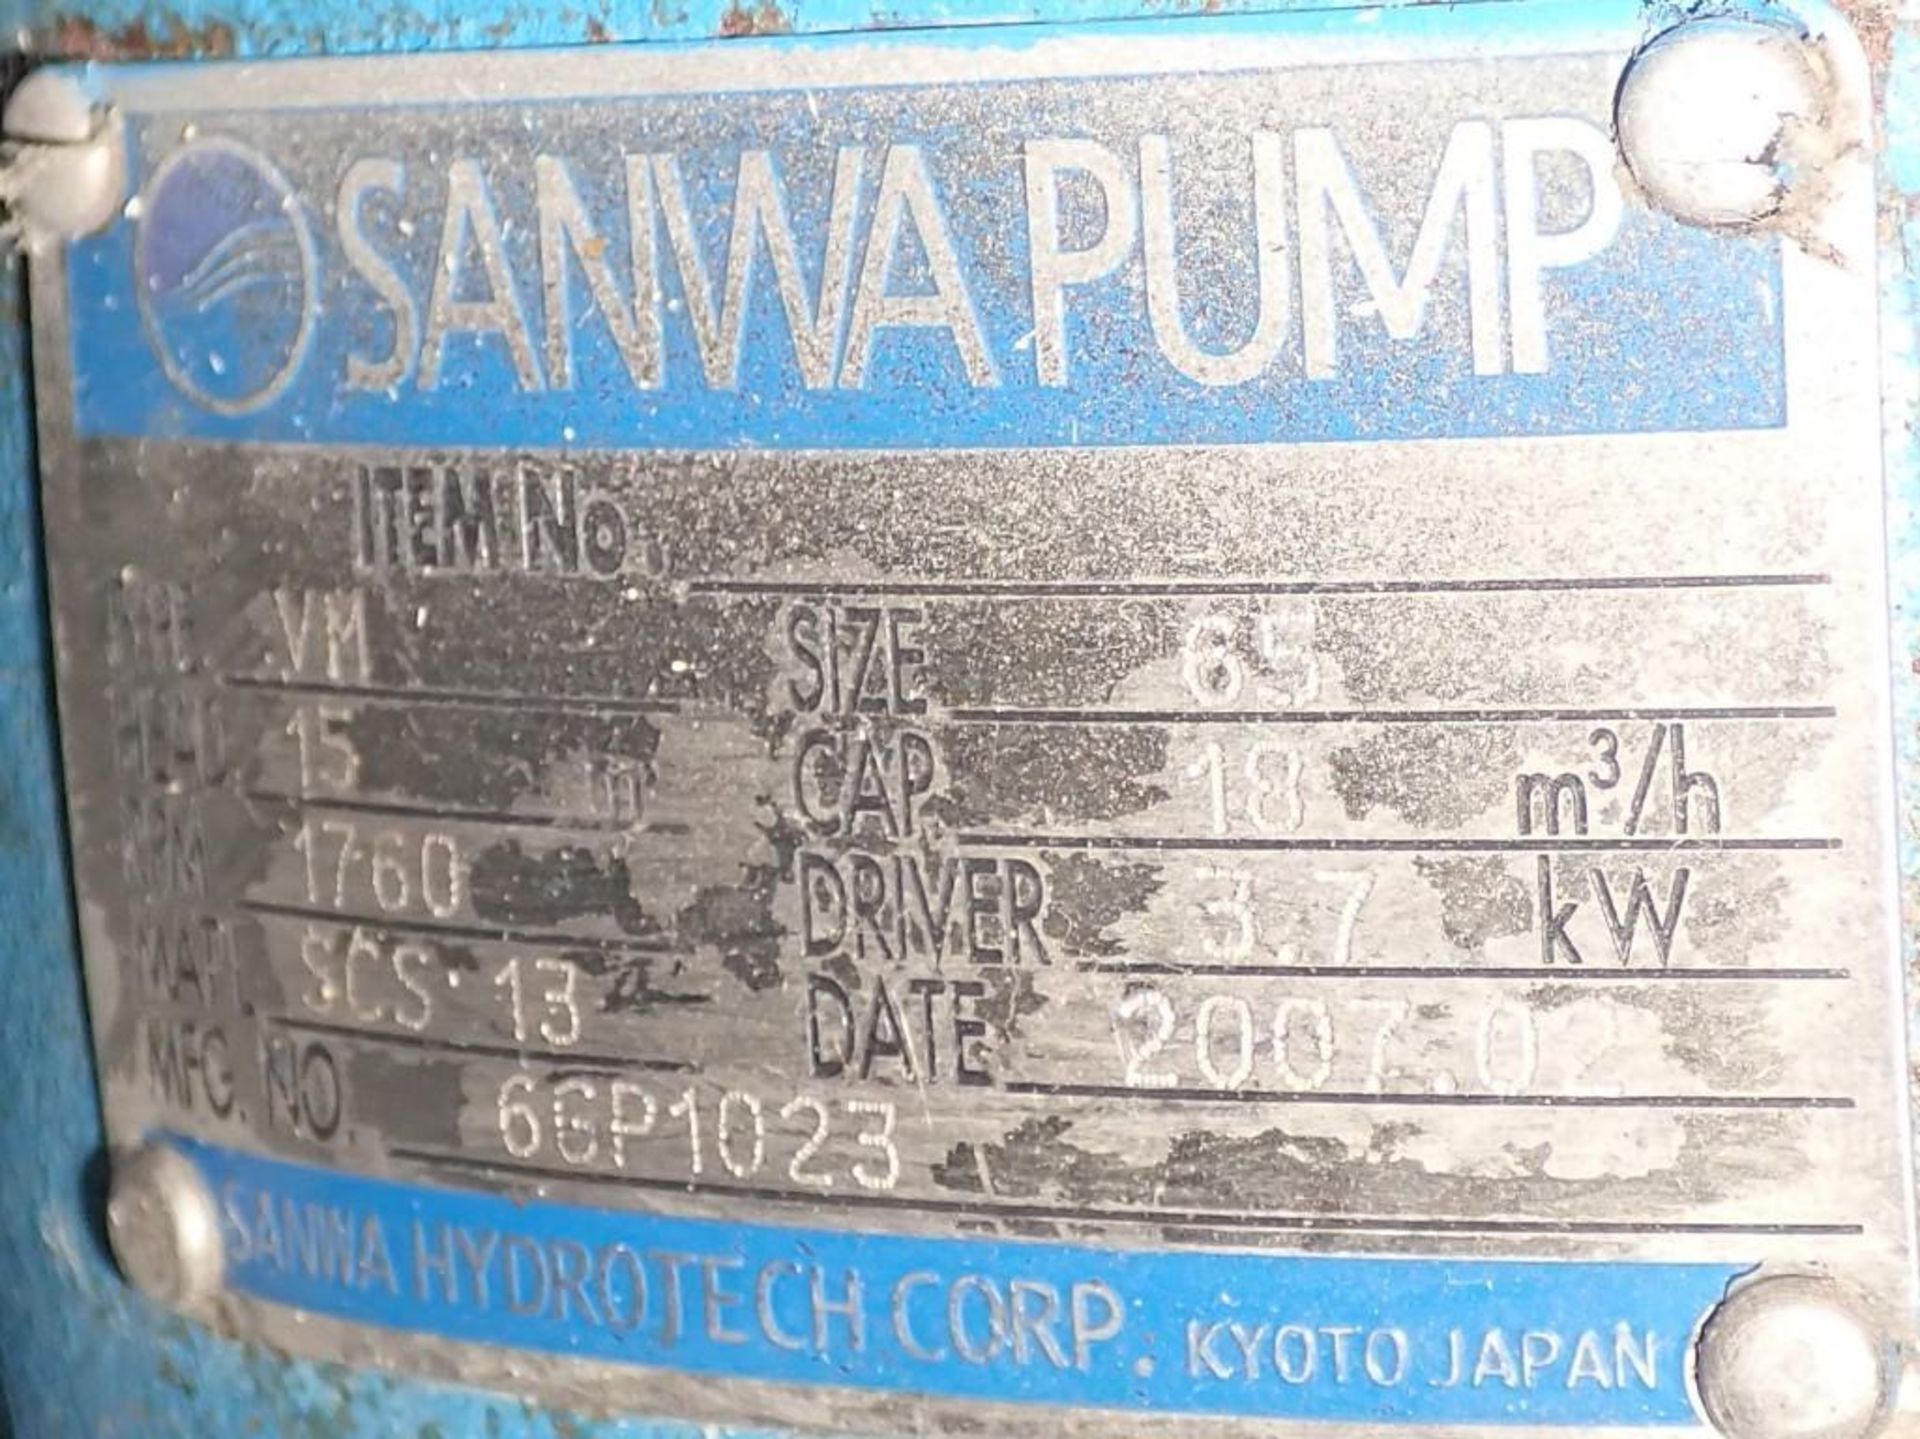 Large Sanwa Pump w/ 5 HP Motor - Image 7 of 7